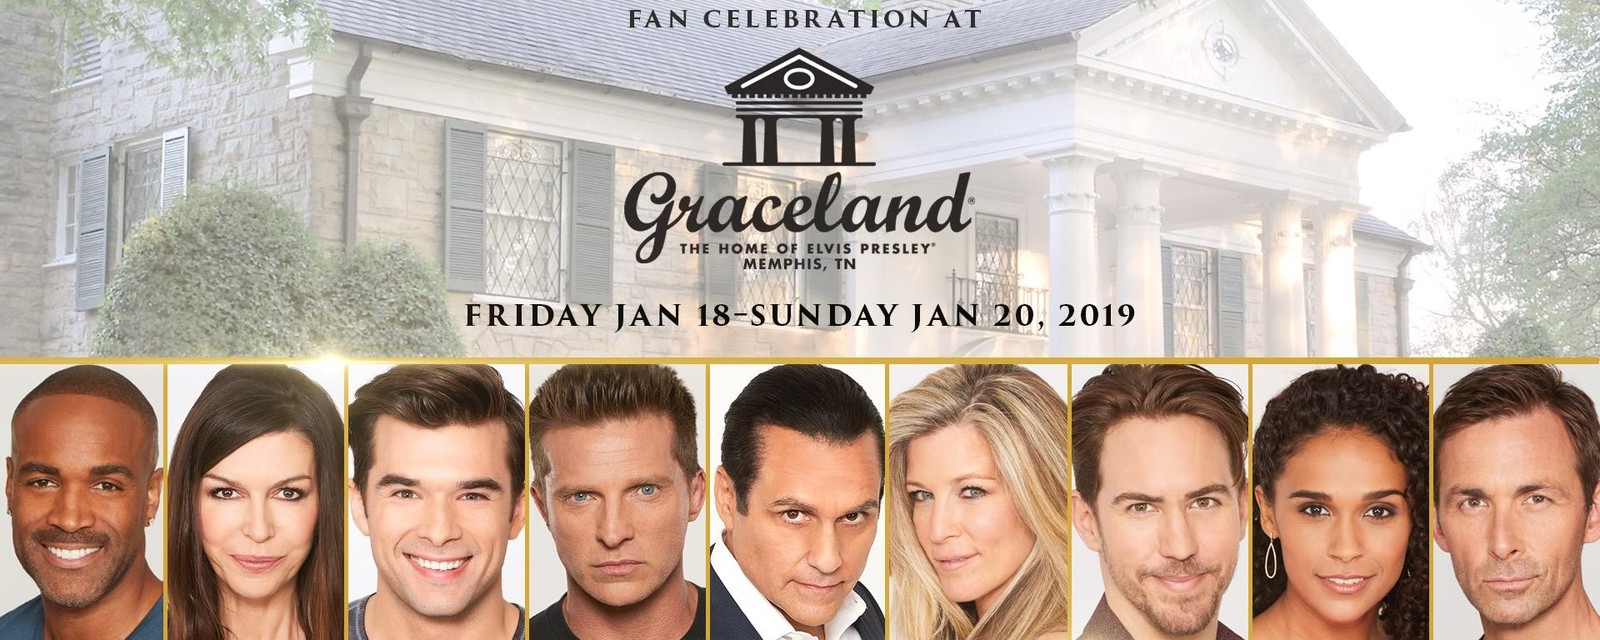 Graceland to Host ABC's General Hospital Fan Celebration General Hospital